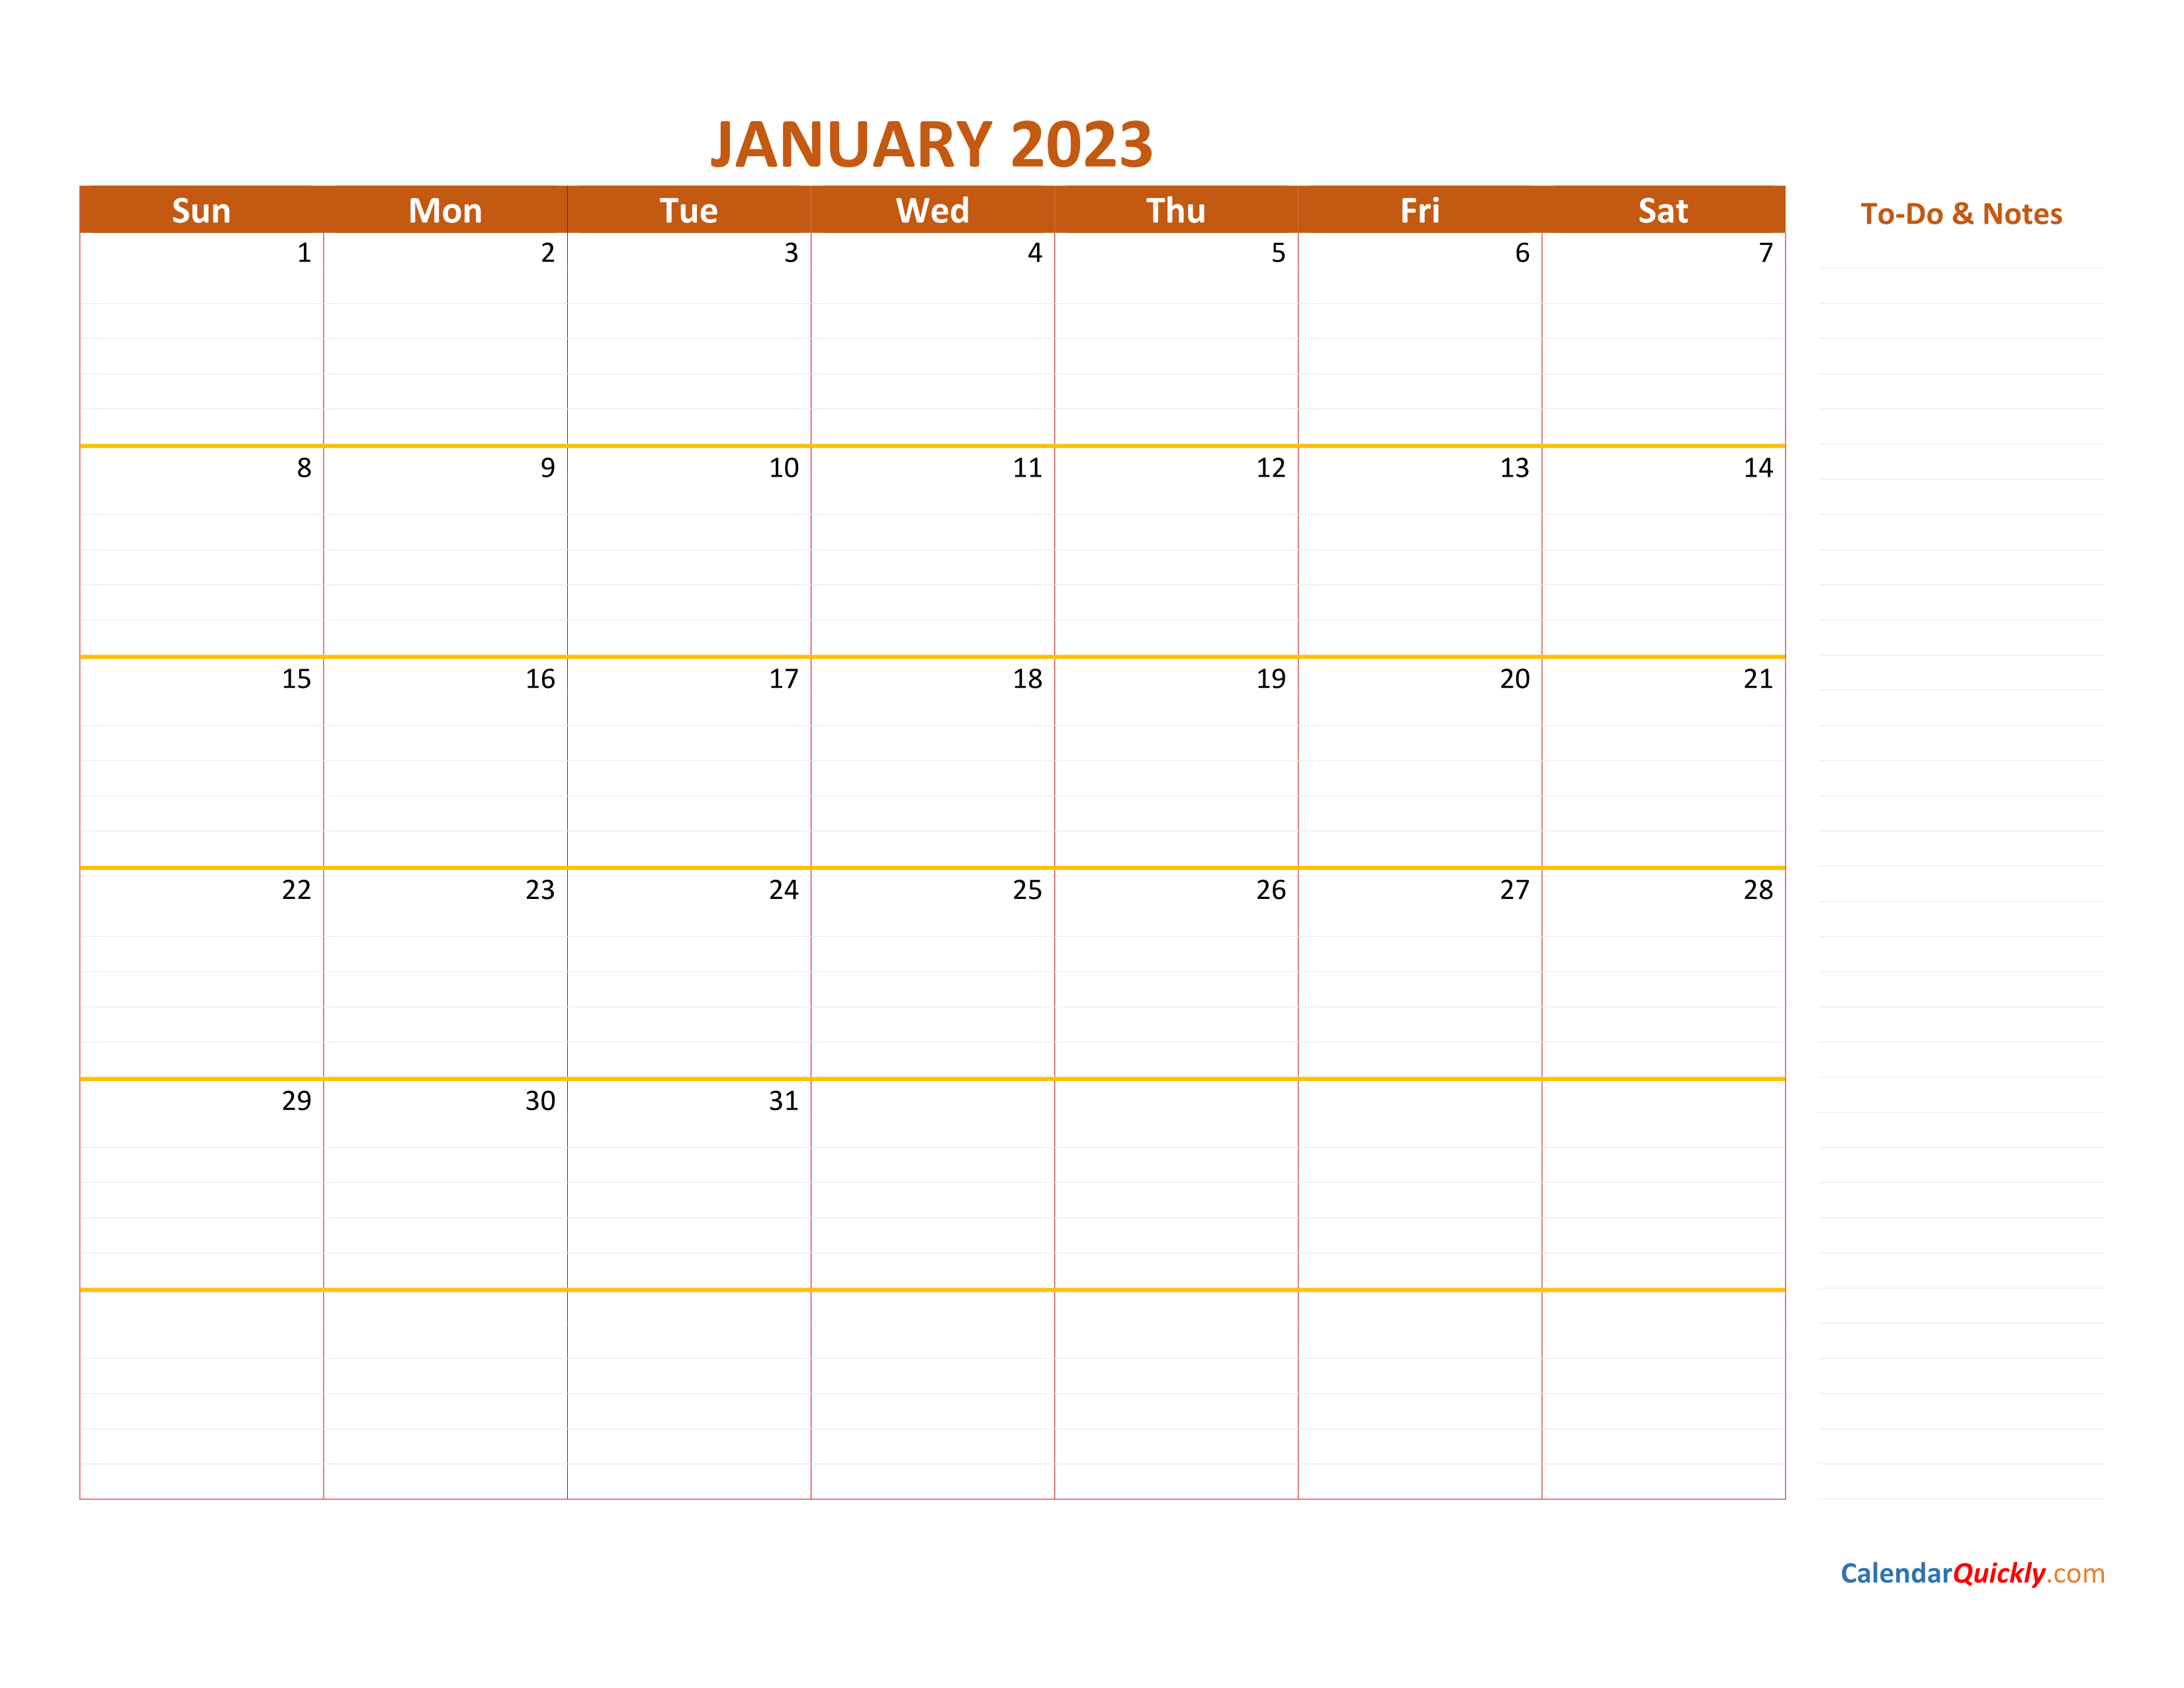 monthly-2023-calendar-calendar-quickly-free-printable-online